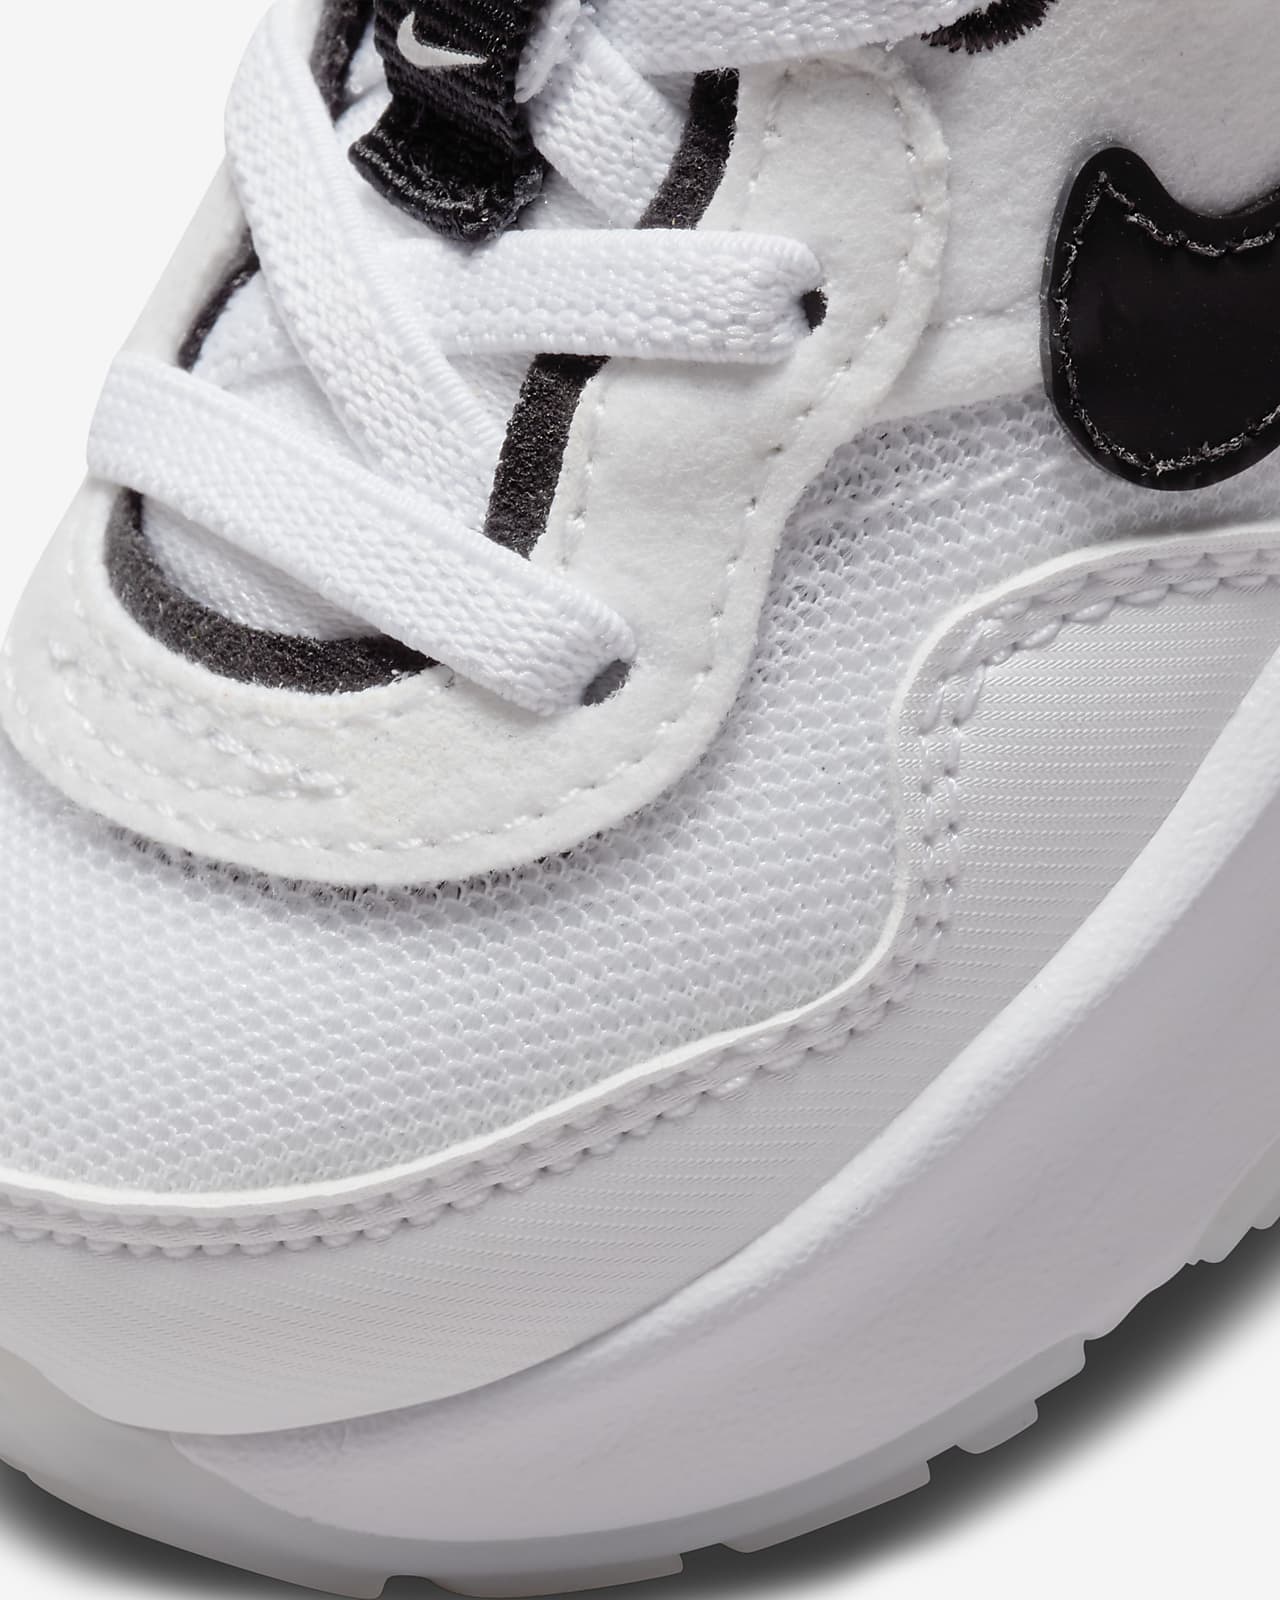 Nike Air Max Motif Baby/Toddler Shoes. | Sneaker low